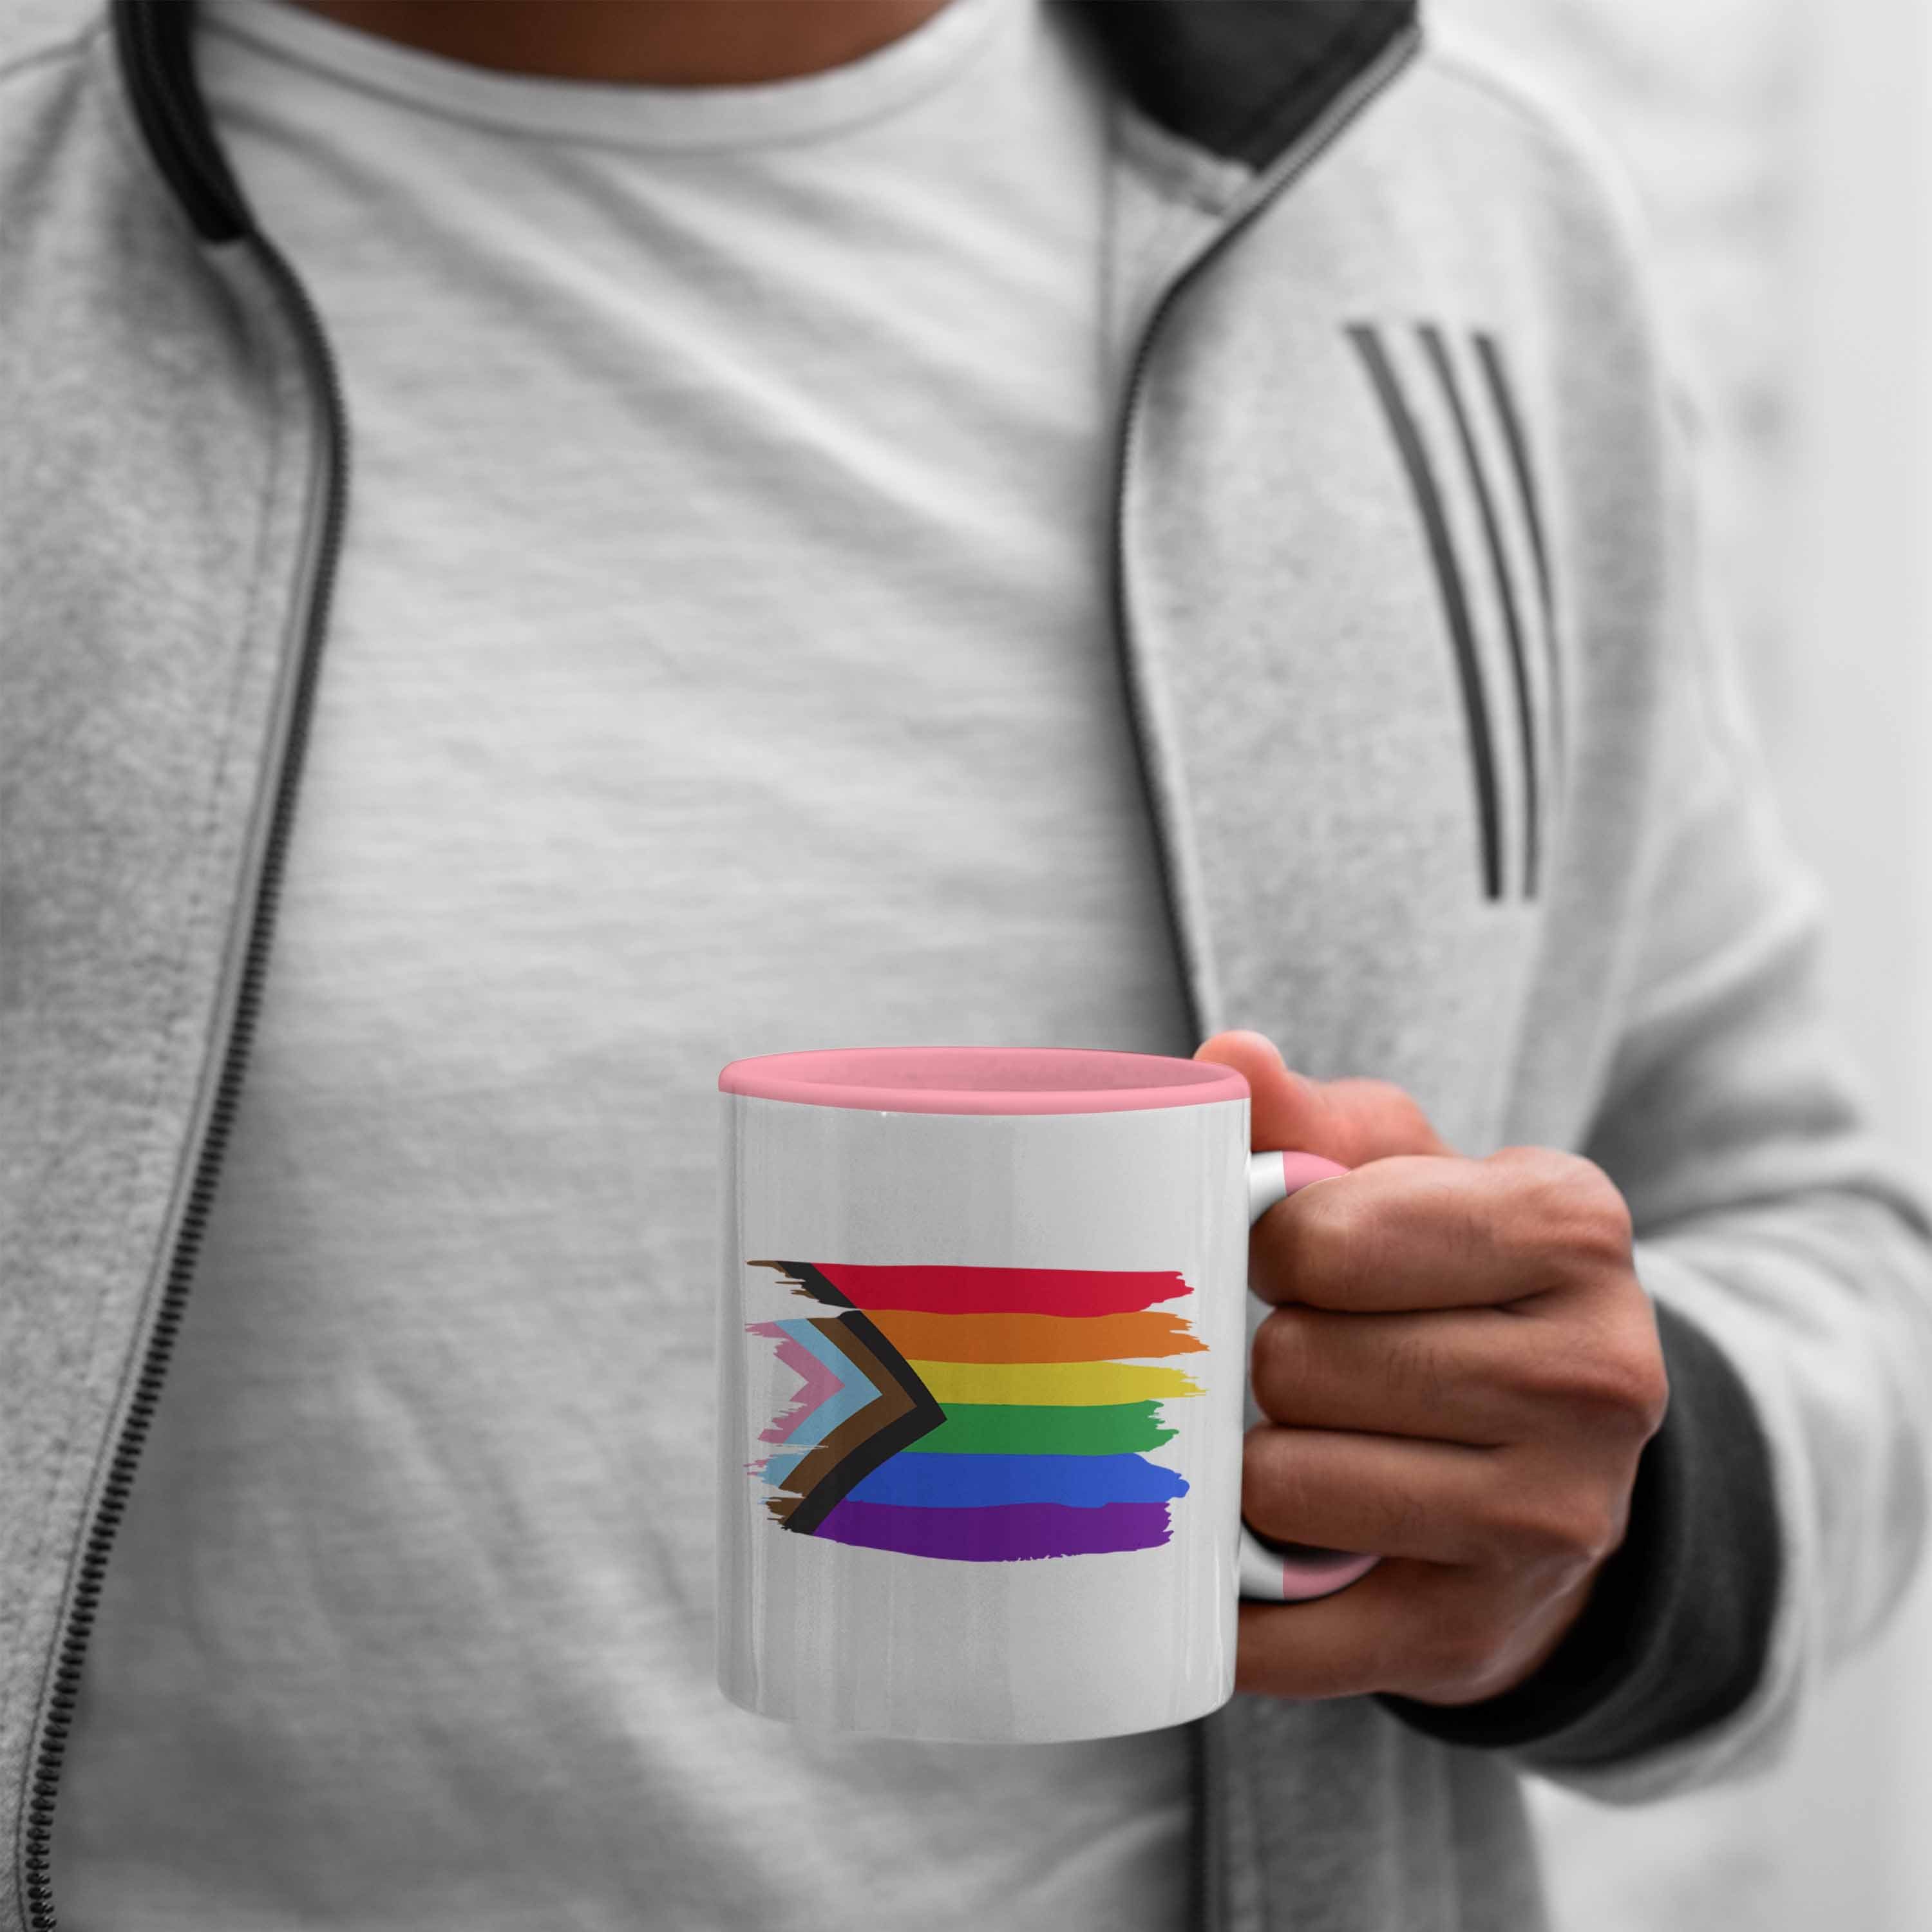 Trendation Schwule LGBT Tasse Flagge Transgender Pride Tasse Geschenk Regenbogen Grafik Rosa Lesben - Trendation